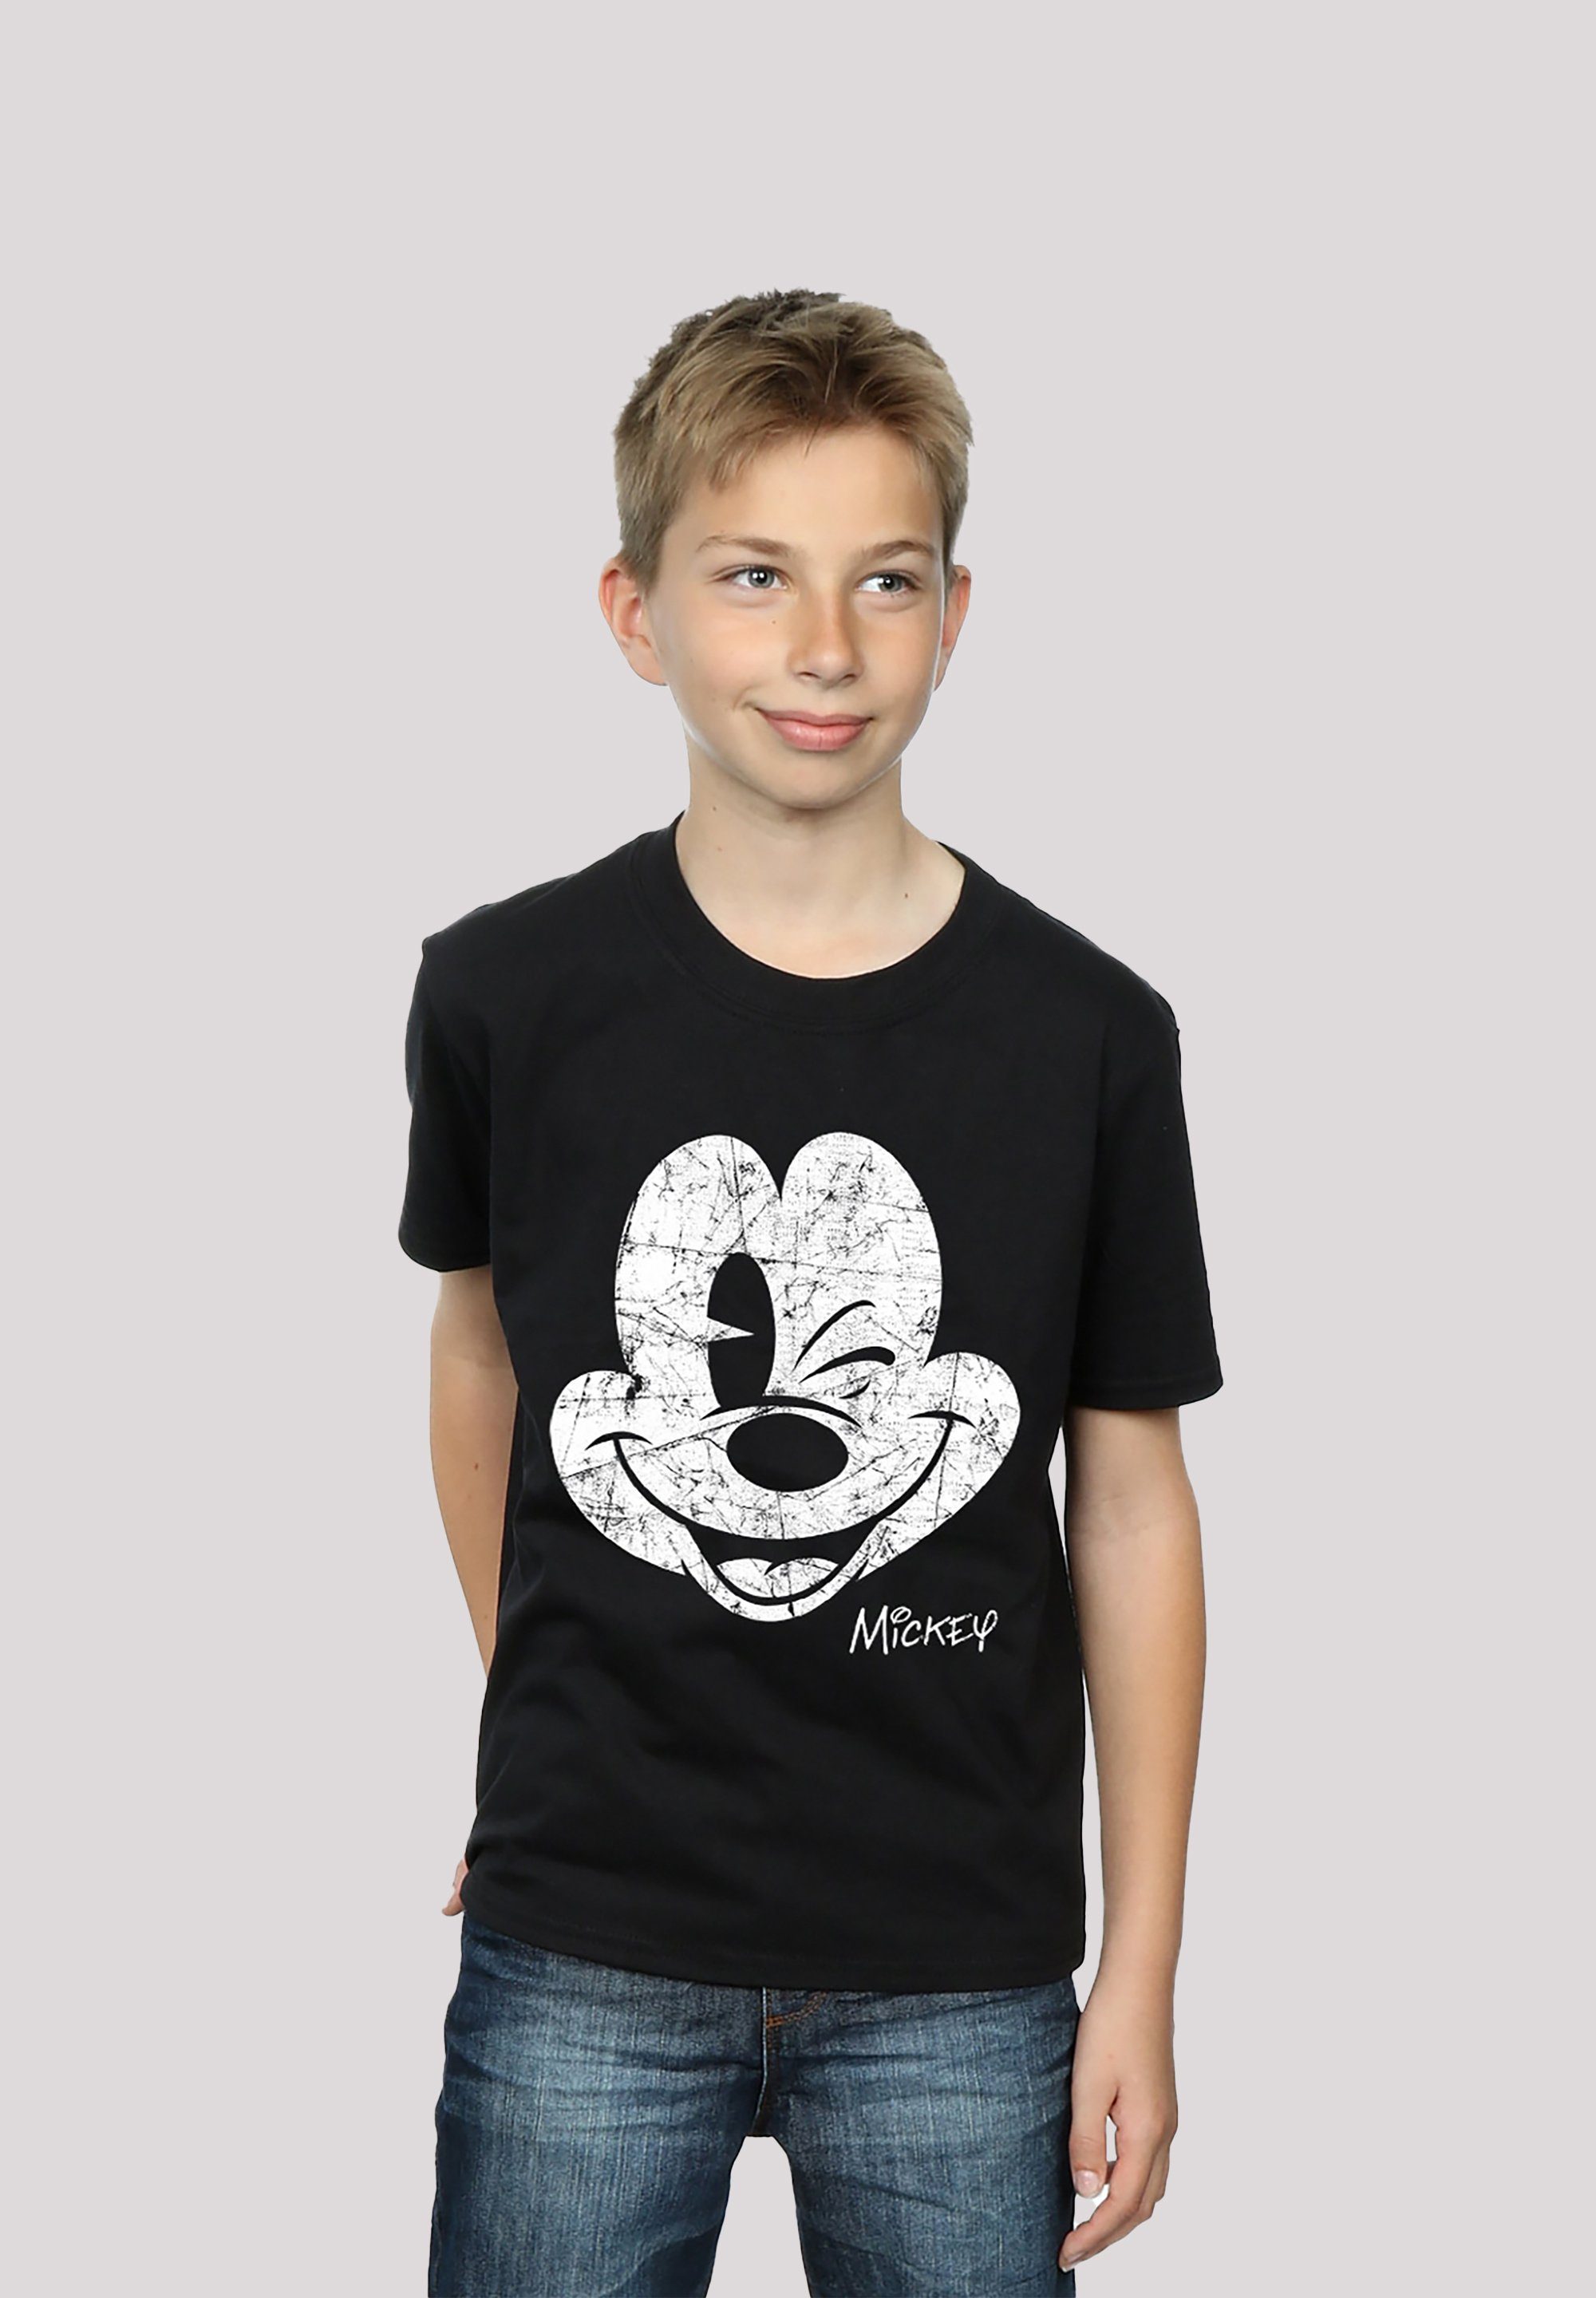 Micky MICKEY F4NT4STIC Kinder,Premium Disney T-Shirt Maus Merch,Jungen,Mädchen,Bedruckt Unisex